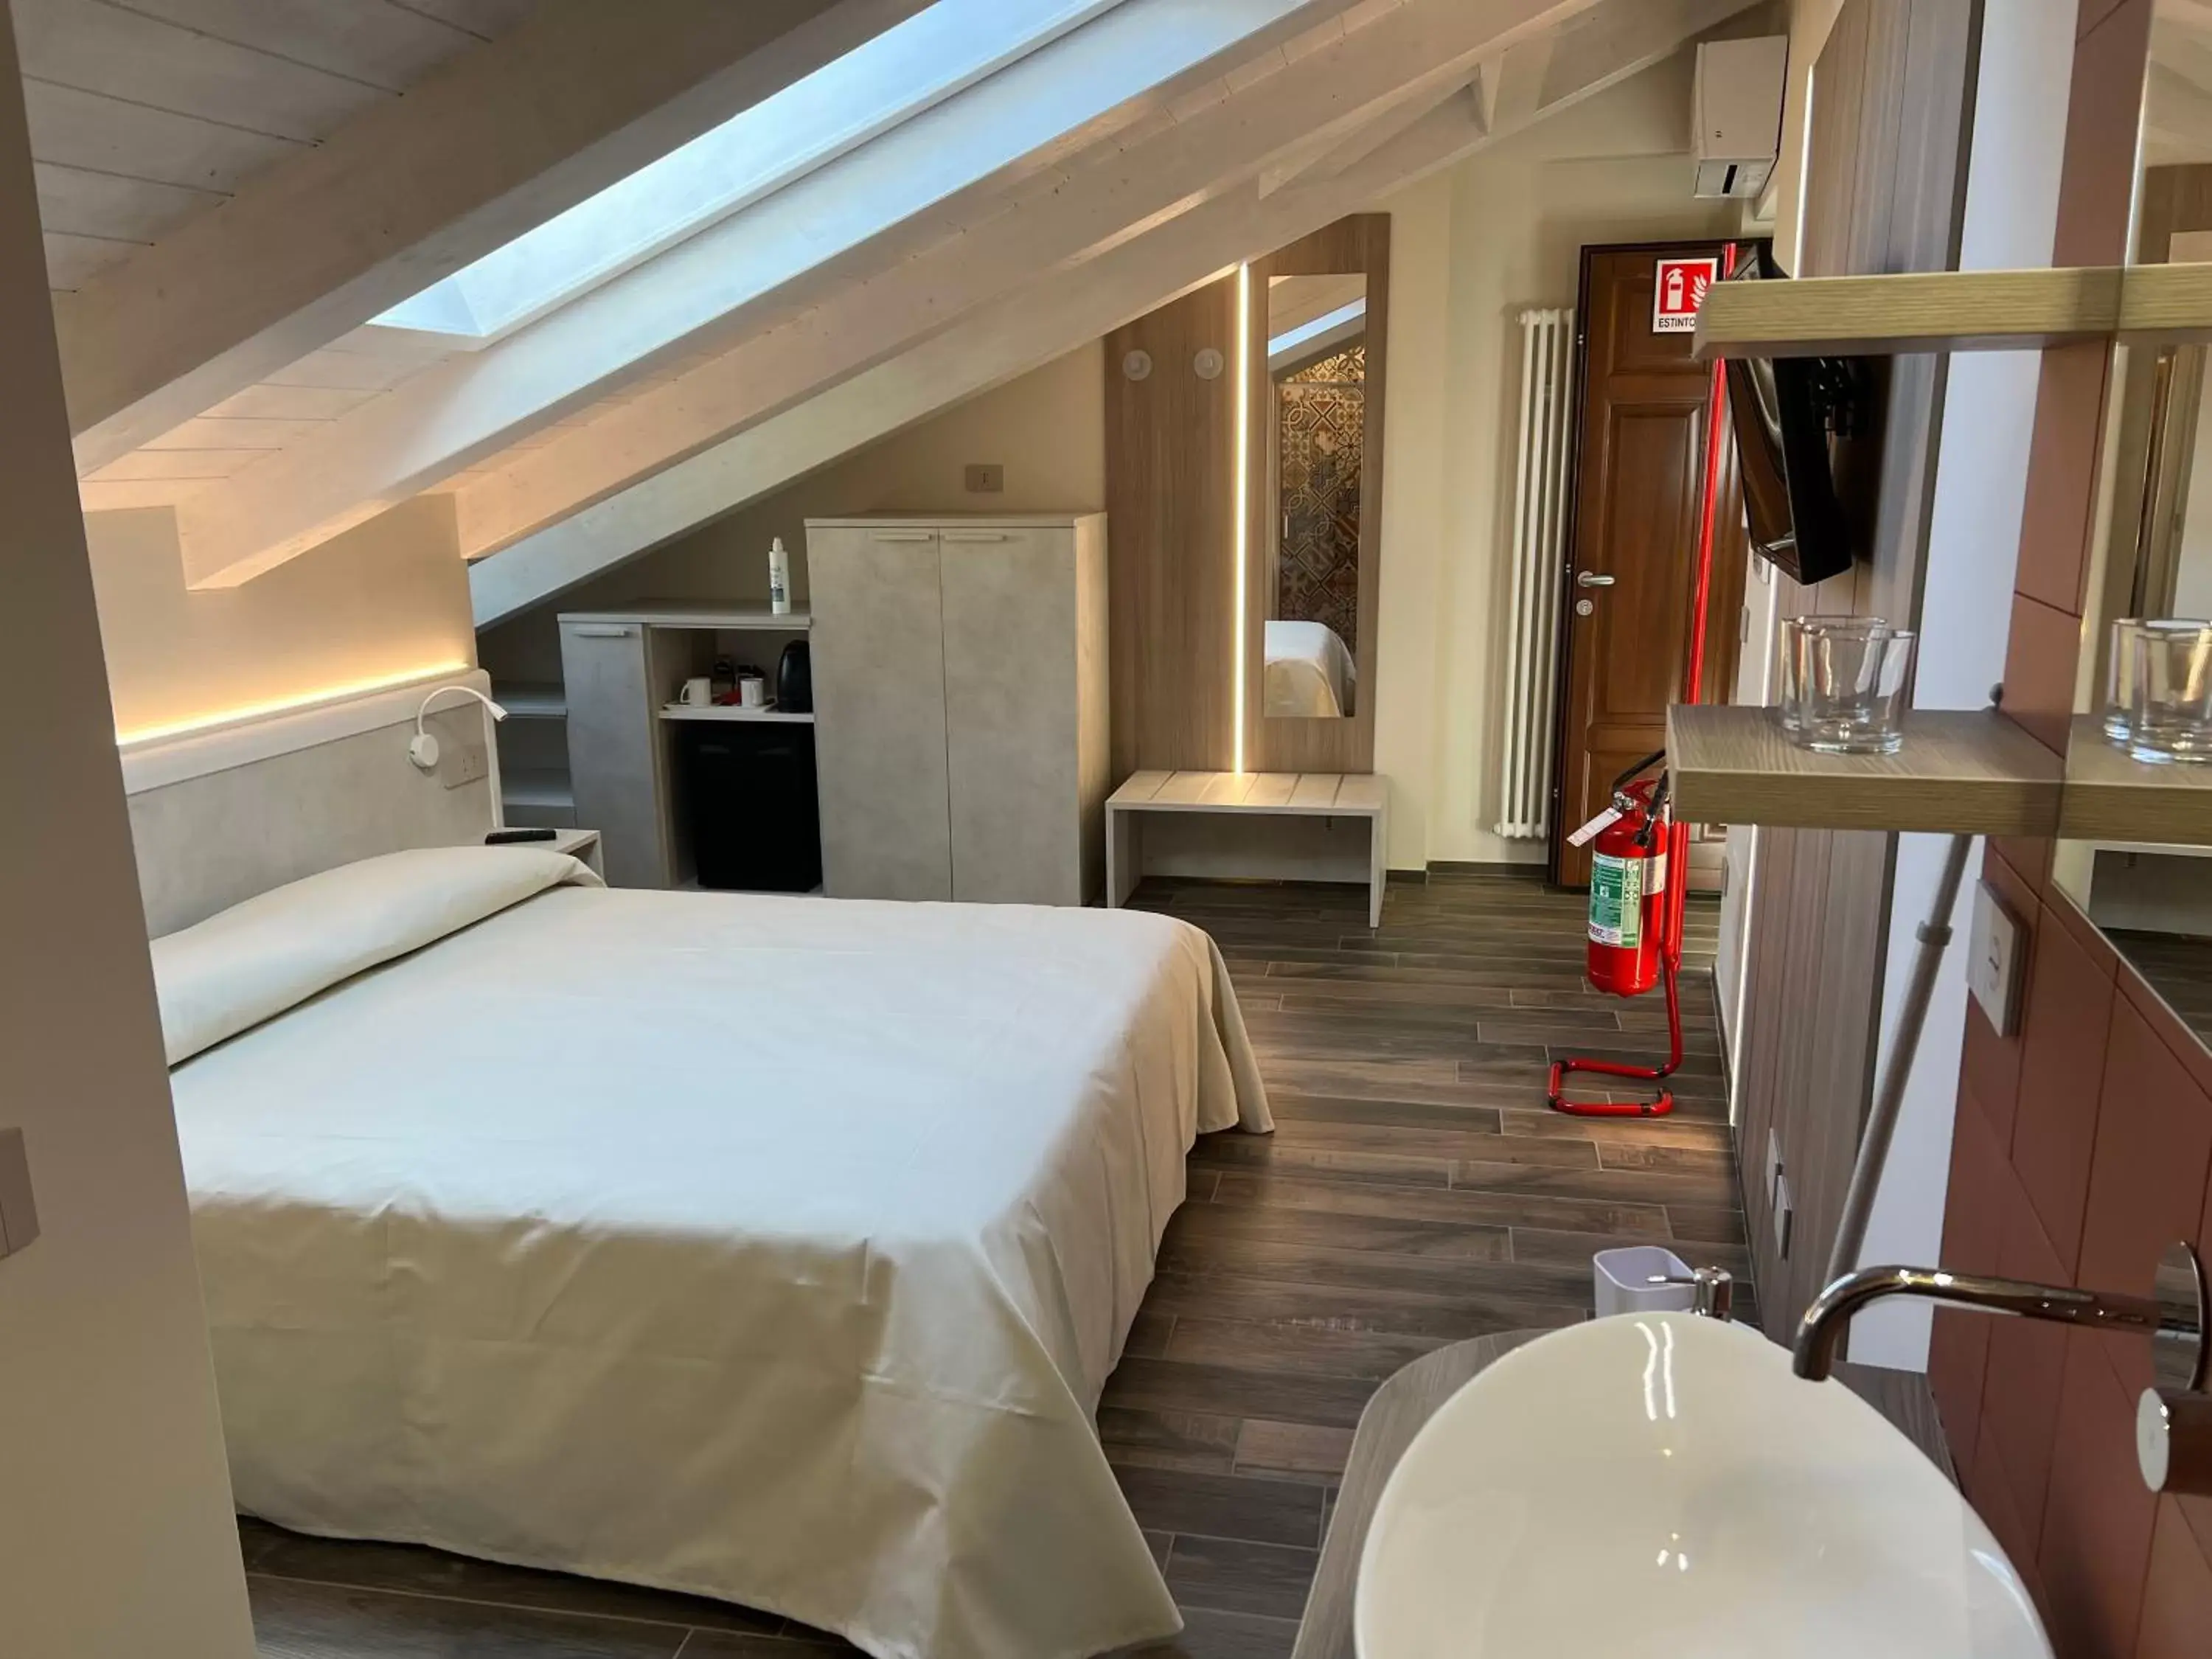 Bedroom in Osteria Senza Fretta Rooms for Rent